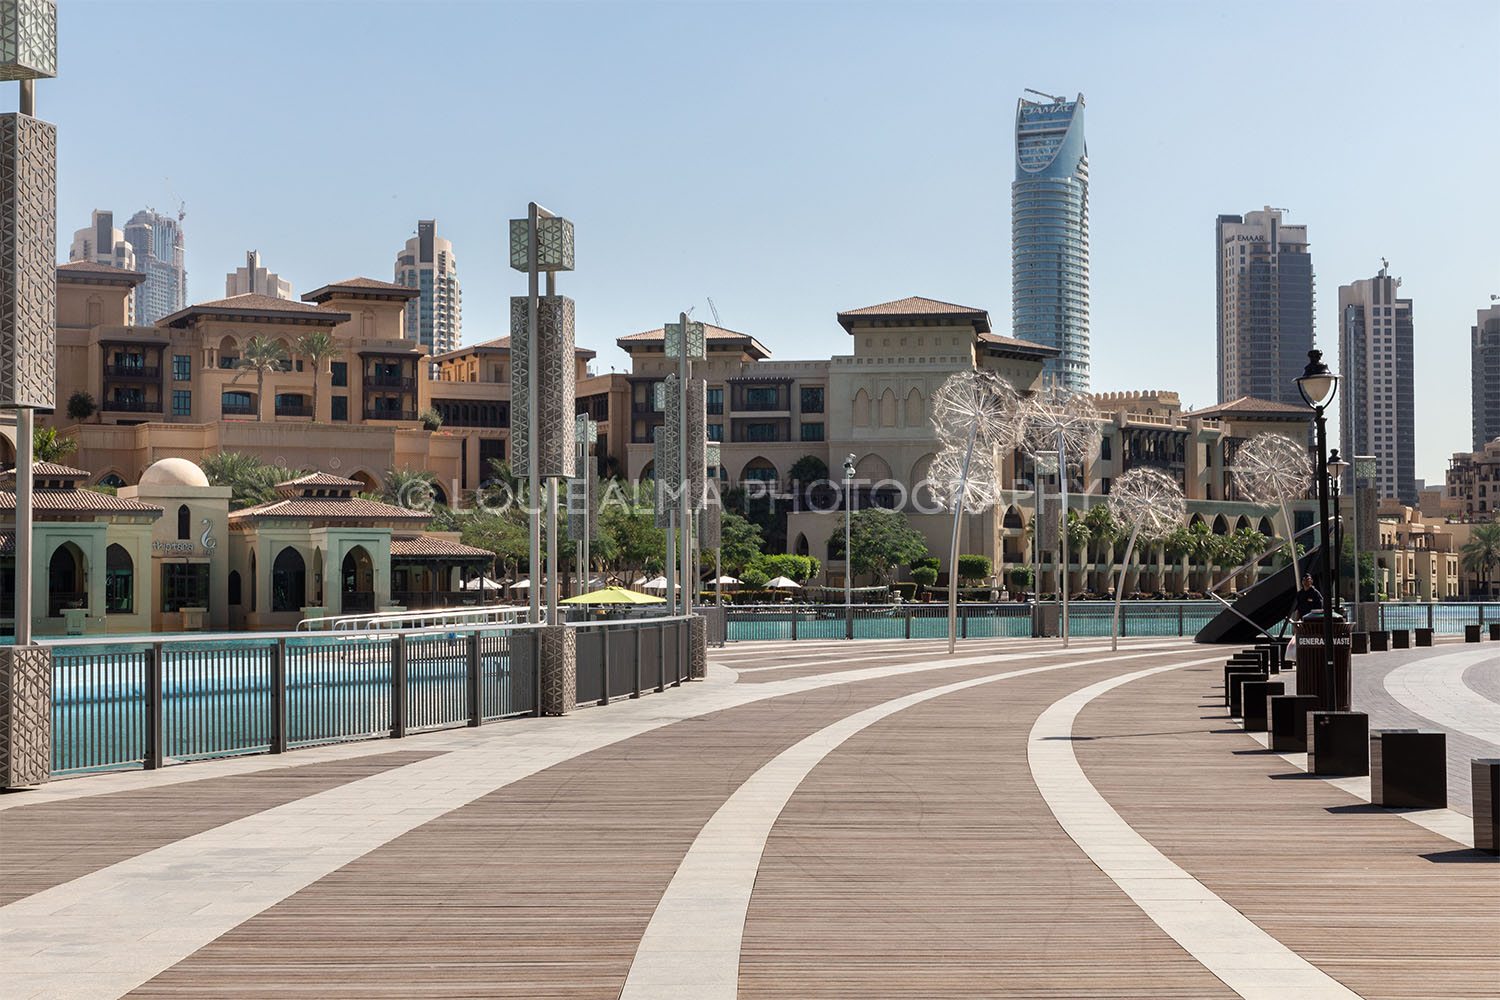 Louie Alma - Travel Photography, Dubai Burj Plaza